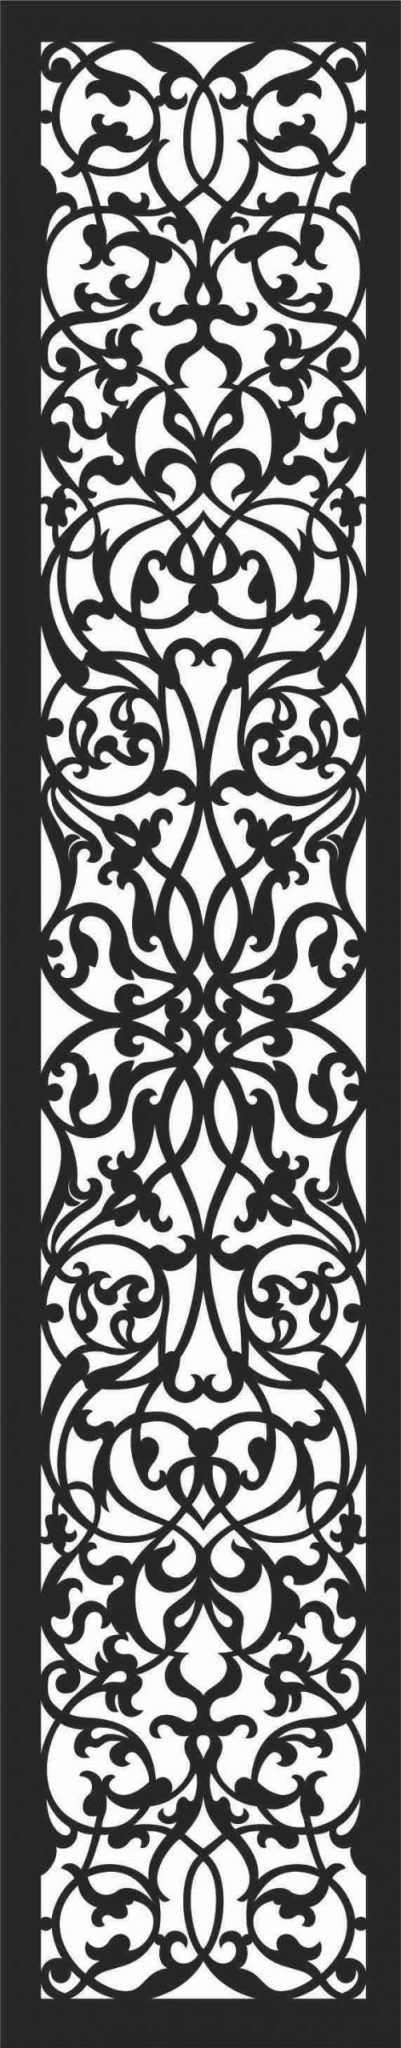 Bloomy Vertical Print Decorative Metal Grilles Screen Panel DXF File